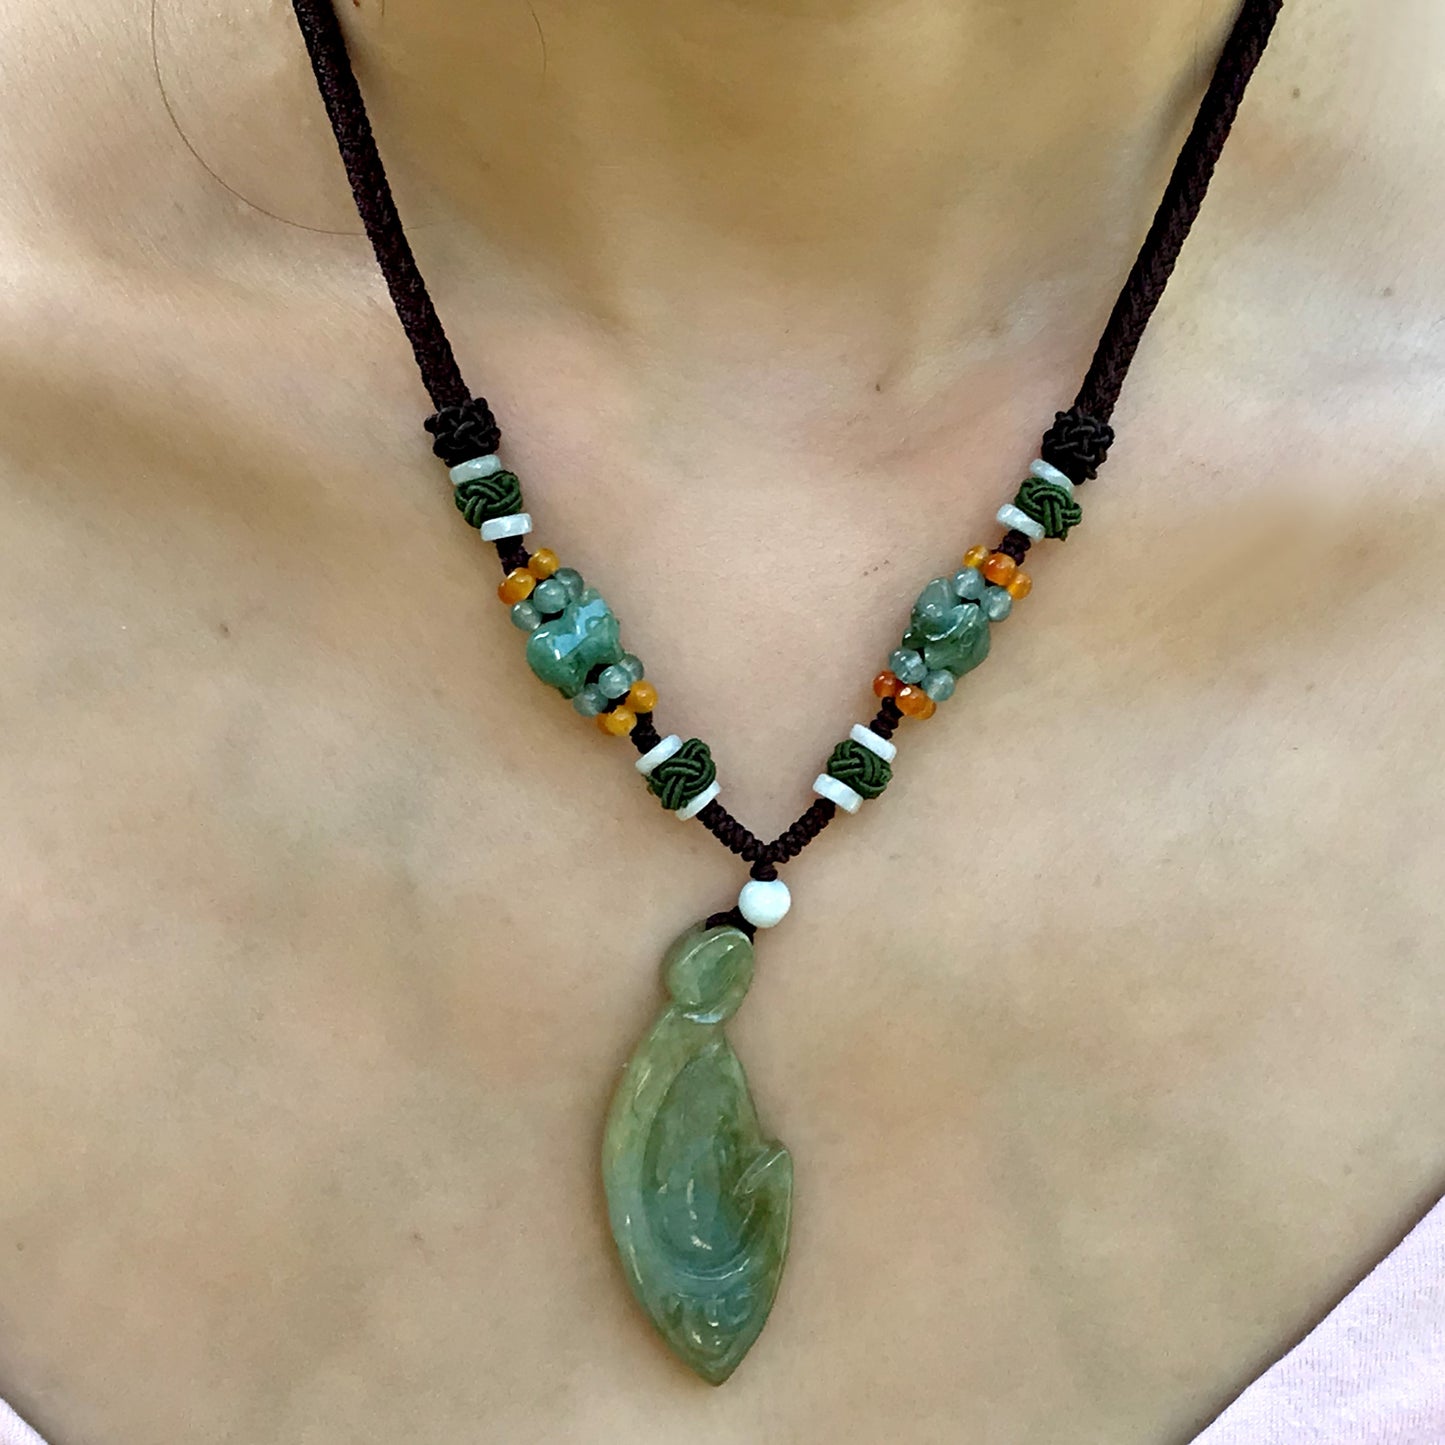 Handmade and Unique: The Clover Shape Jade Necklace